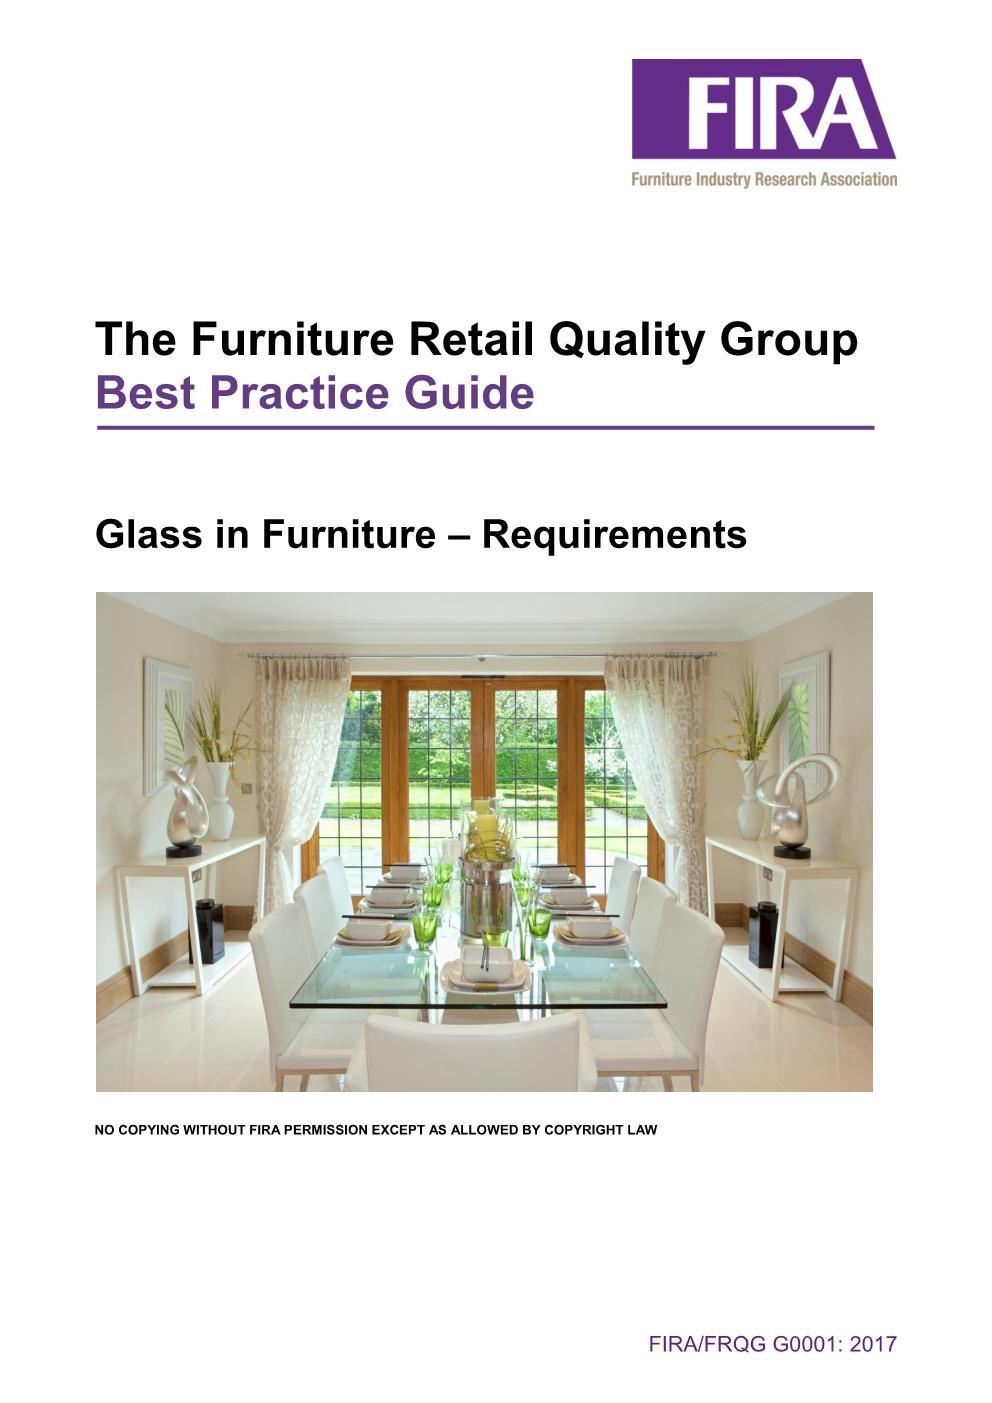 Glass in Furniture: Best Practice Guide (FRQG)